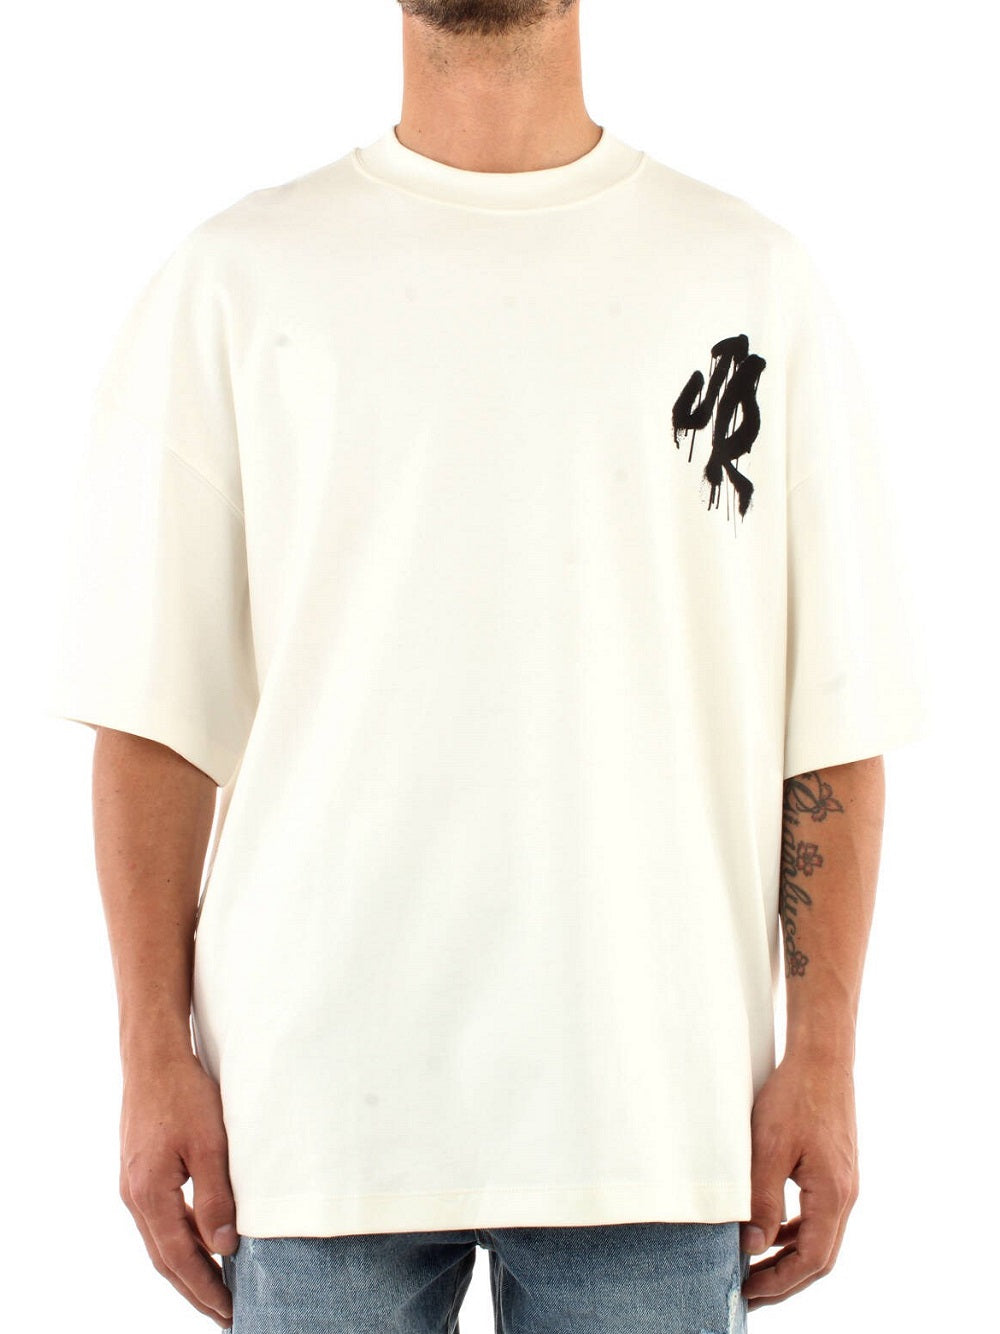 T-shirt John Richmond modello UMP22150TS oversize bianca a manica corta